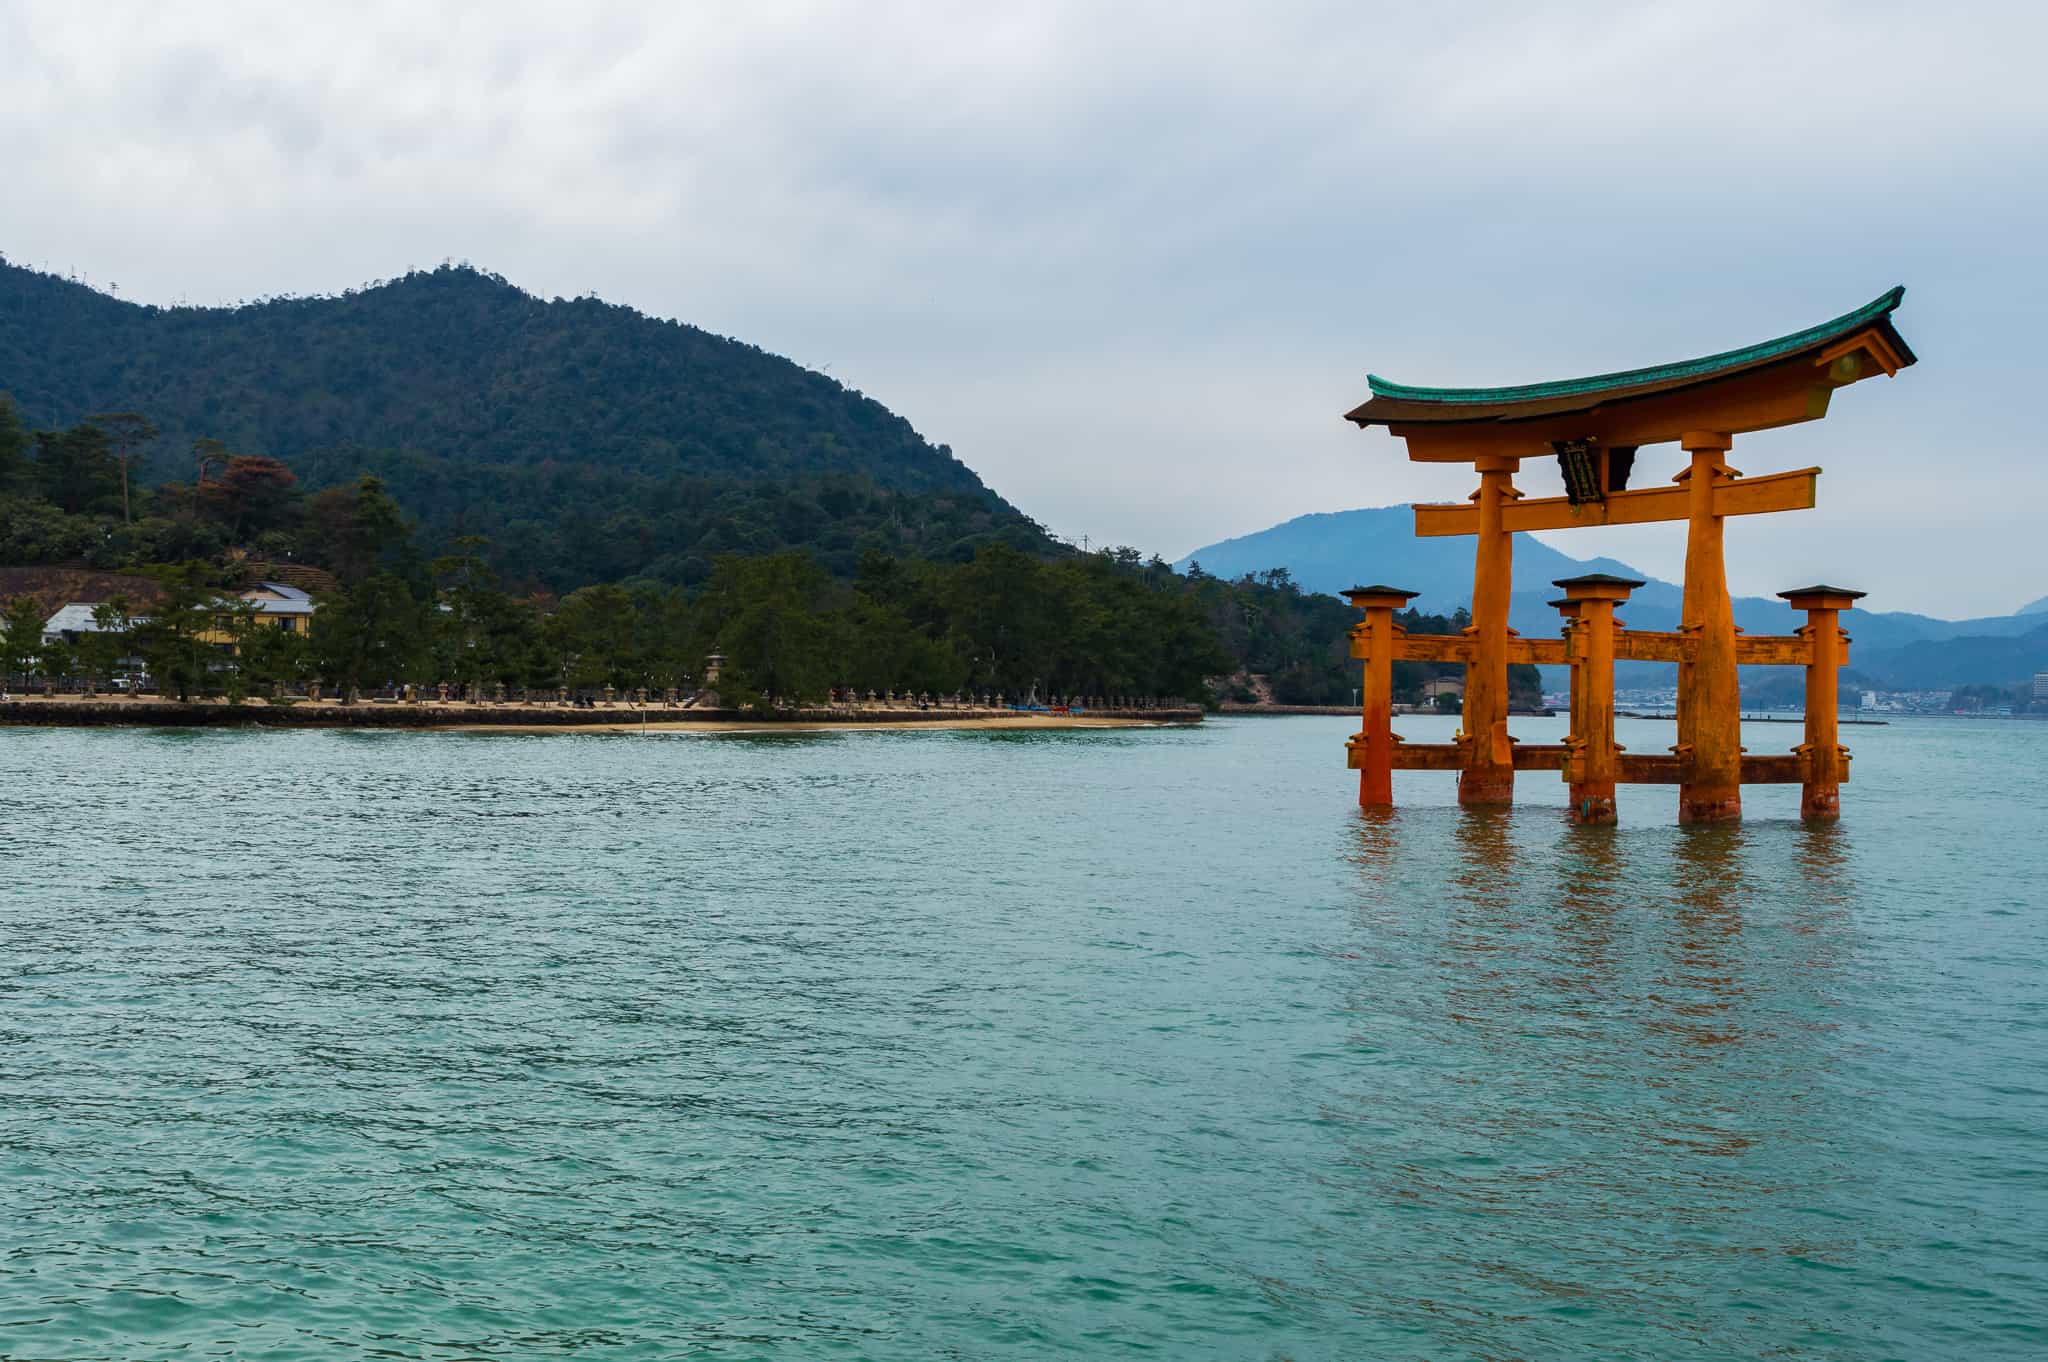 The "floating" Torii Gate, Miyajima Island, Japan